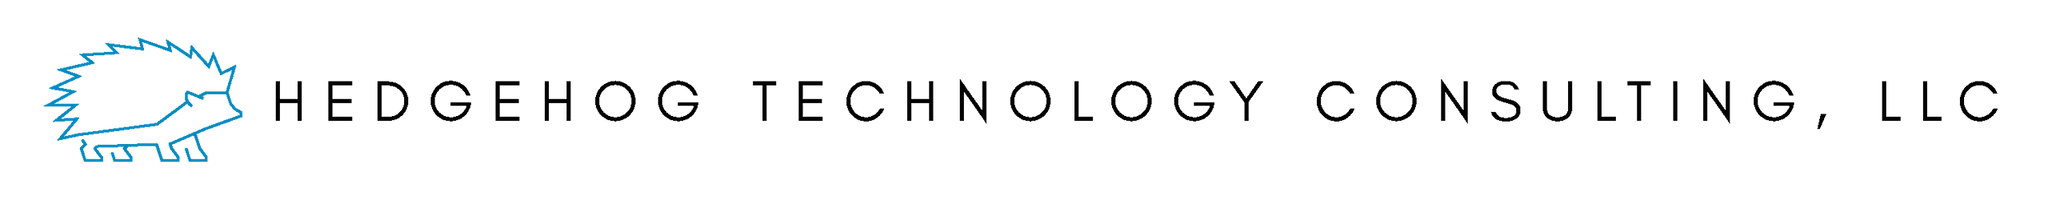 Hedgehog Technology Consulting, LLC